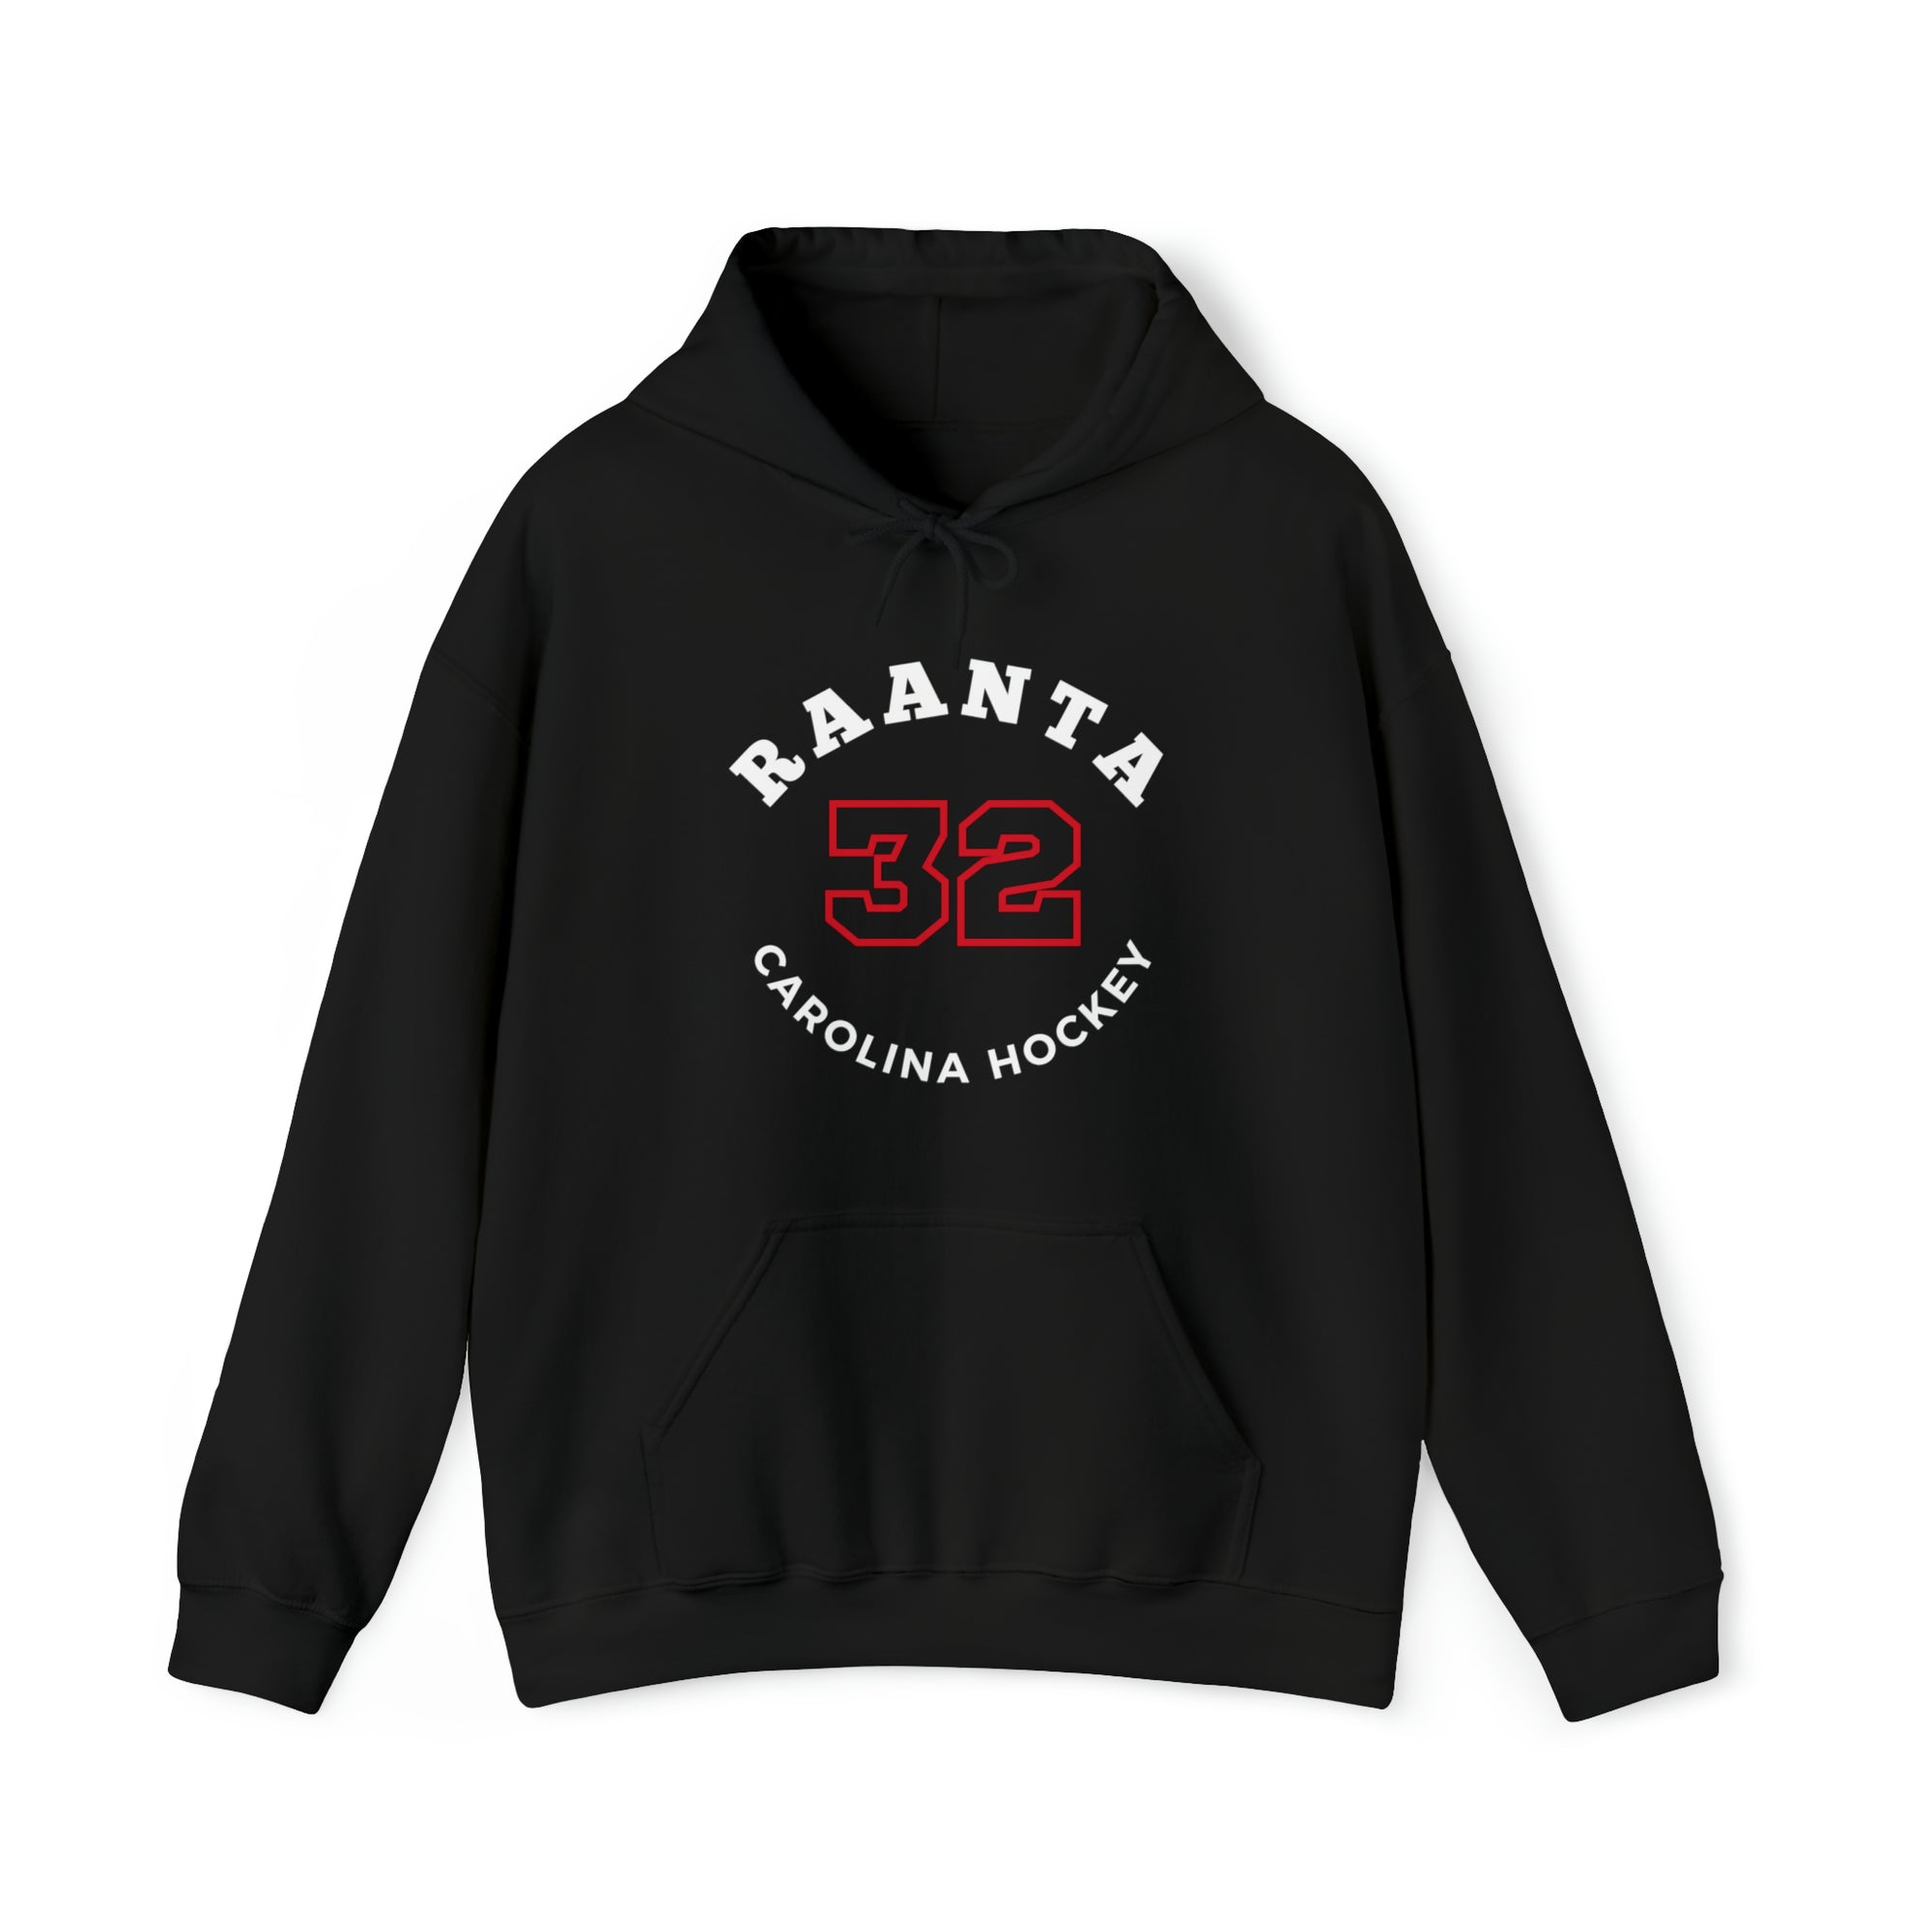 Raanta 32 Carolina Hockey Number Arch Design Unisex Hooded Sweatshirt